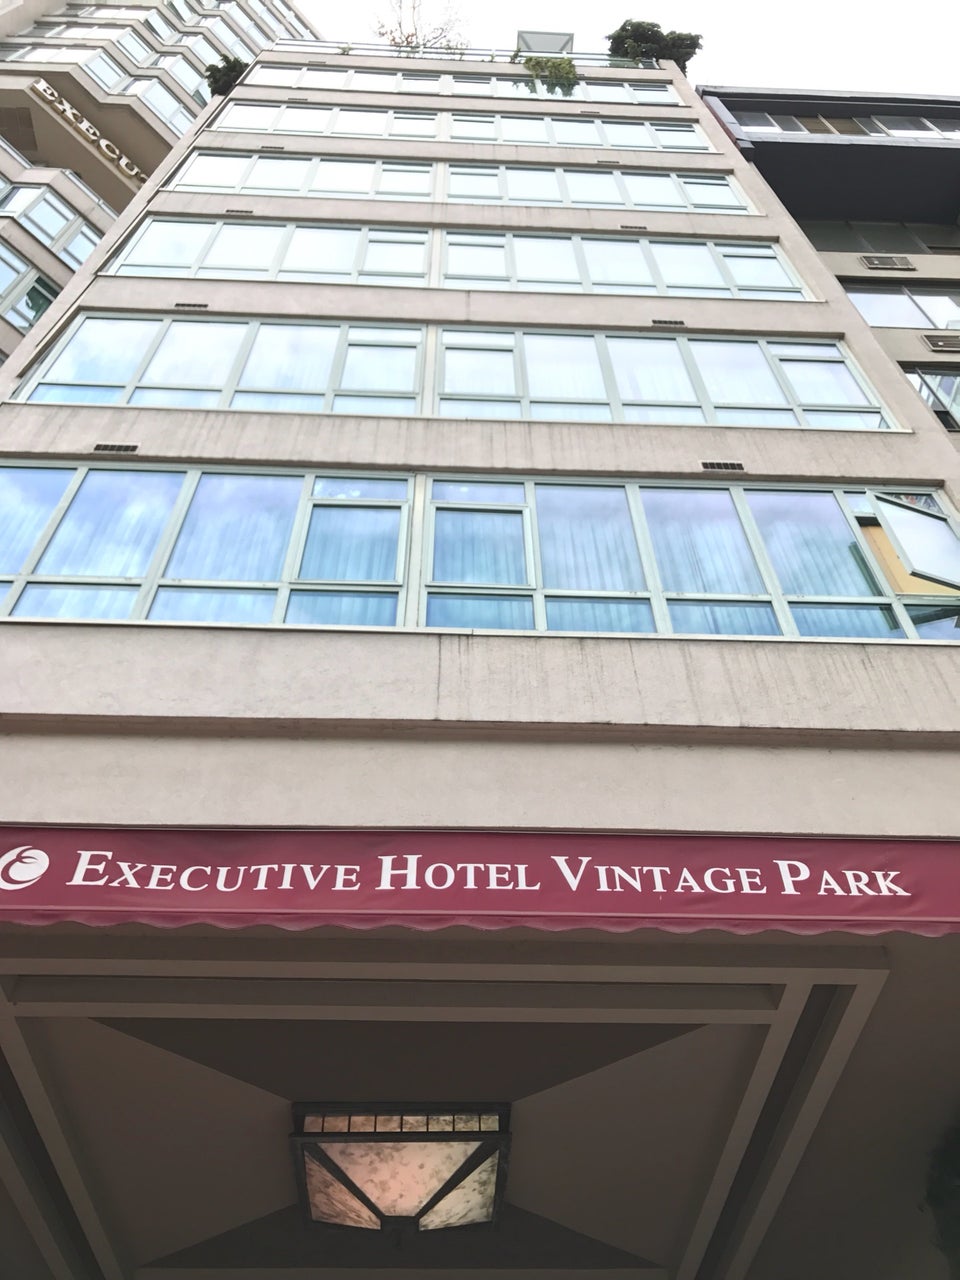 Photo of Executive Hotel Vintage Park